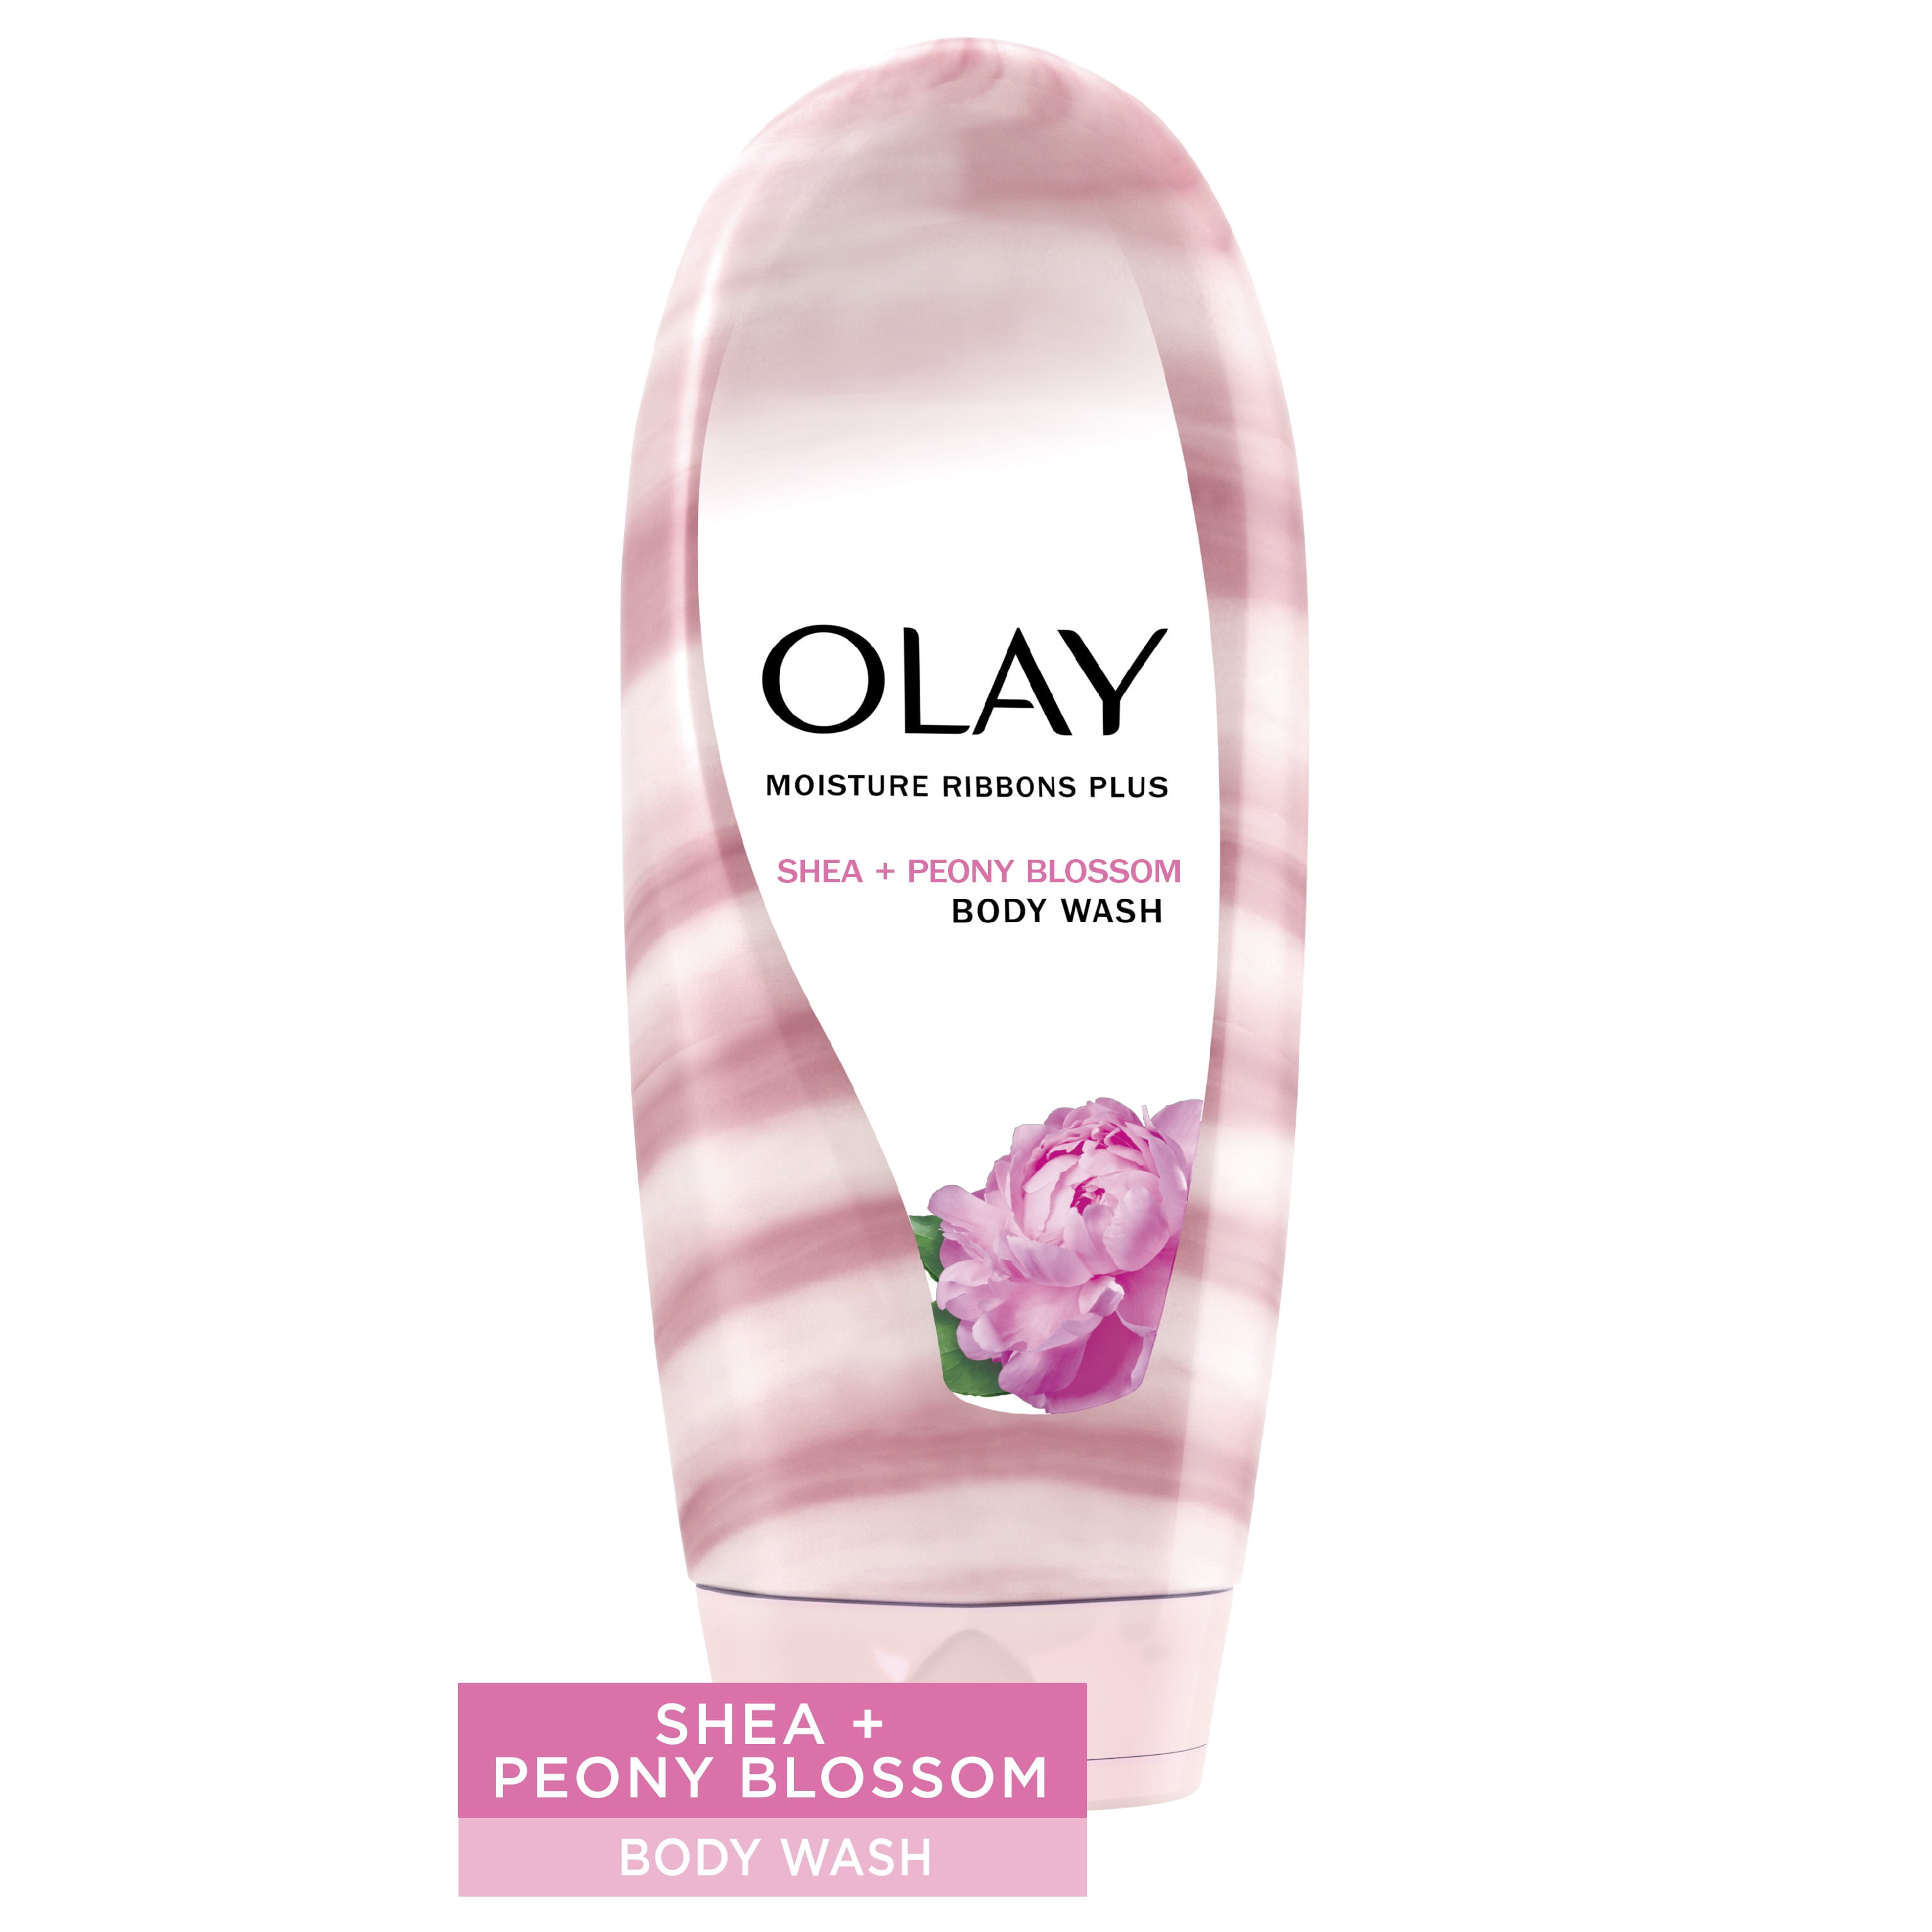 Olay Moisture Ribbons Plus Shea and Peony Blossom Body Wash, 18 fl oz